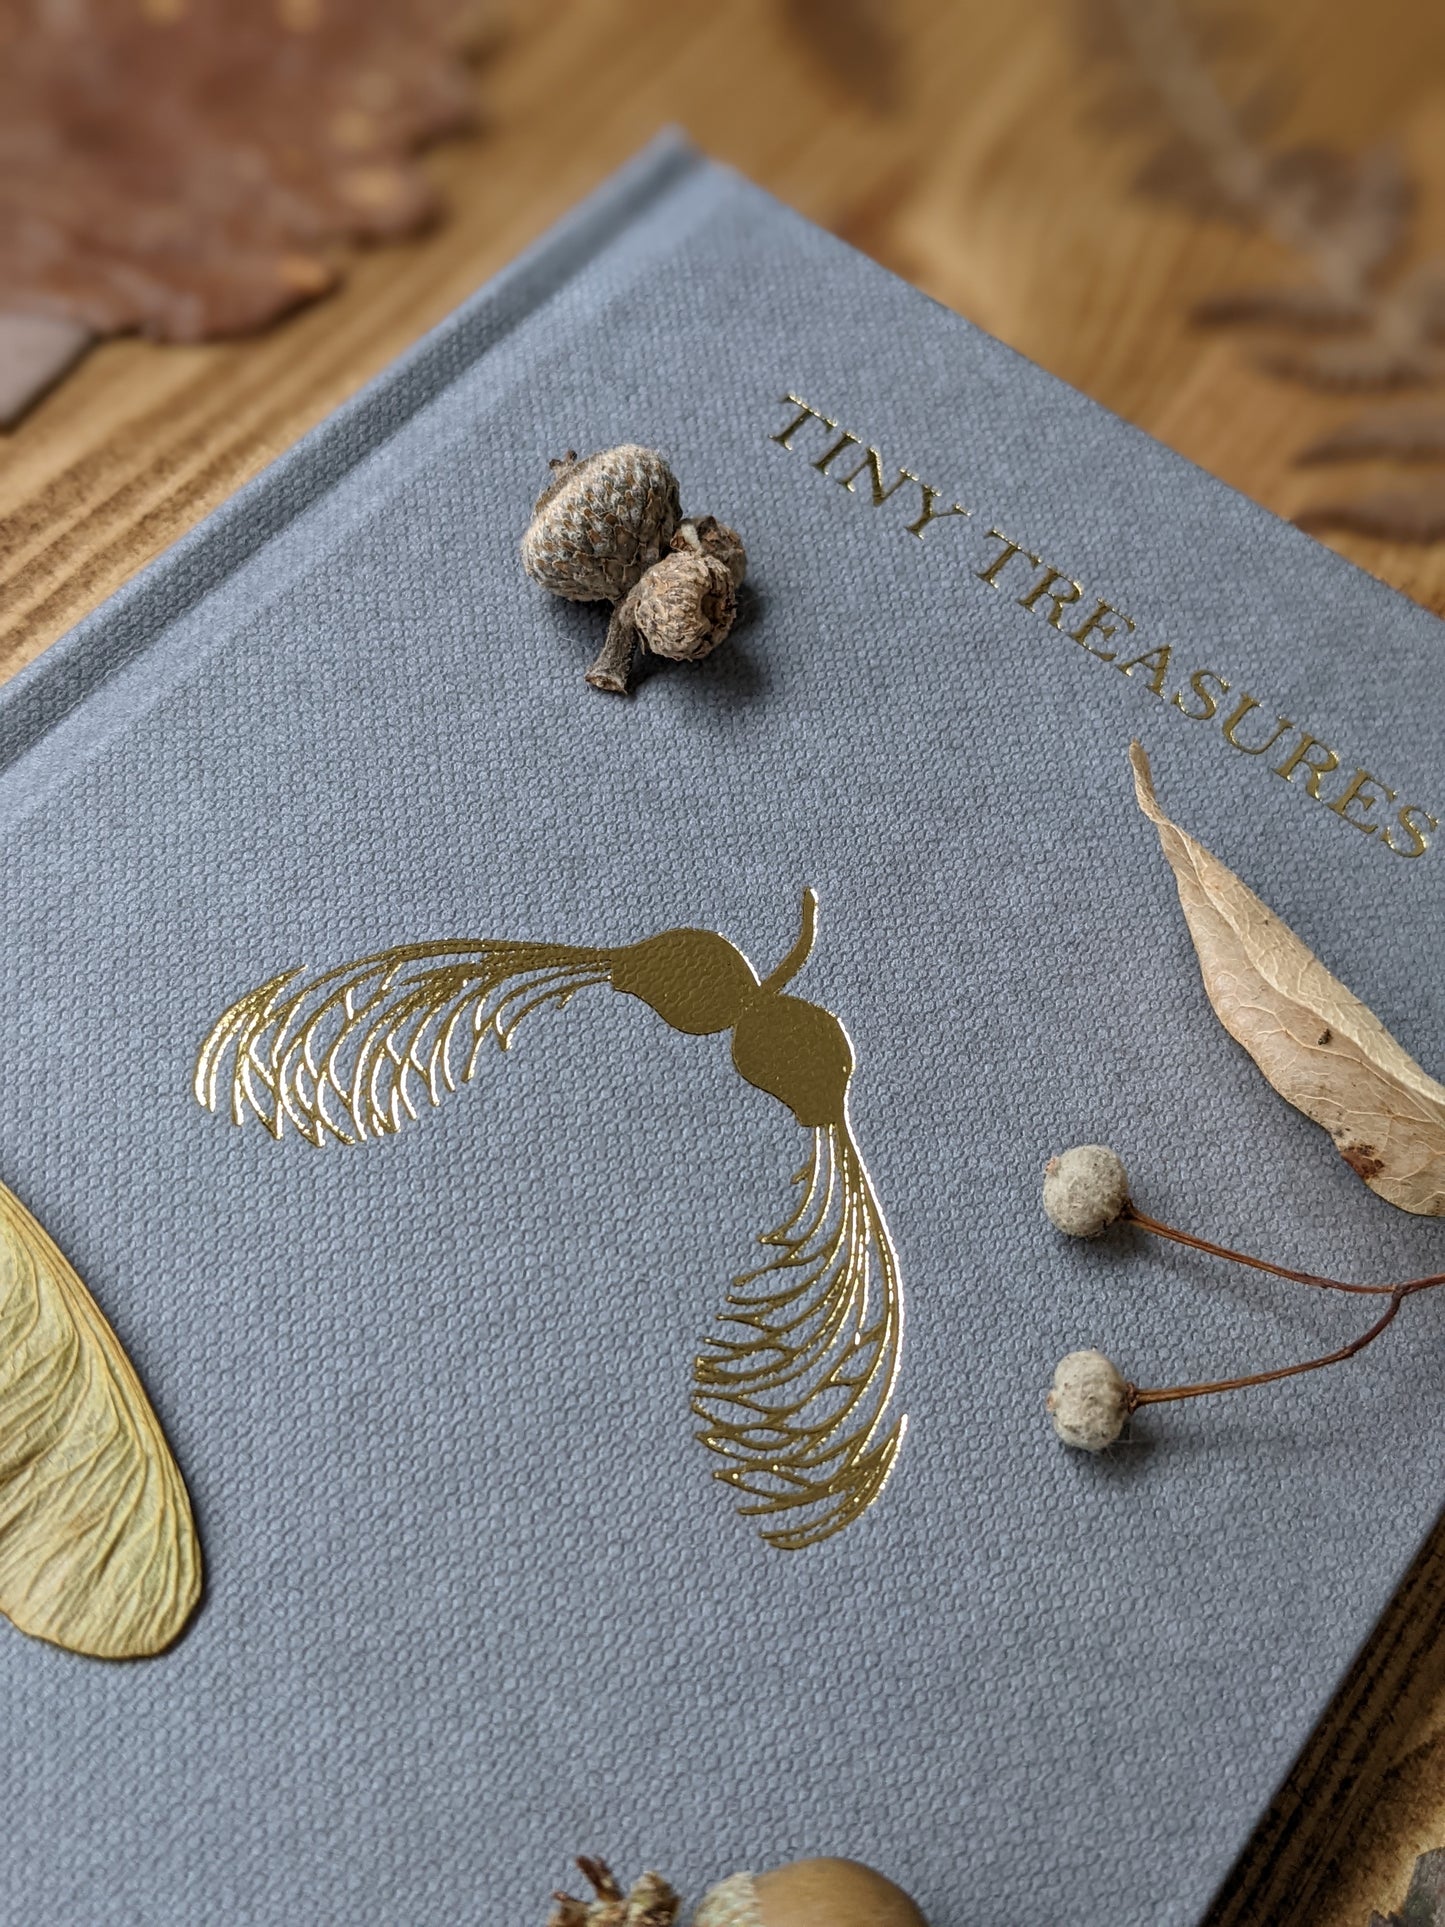 Tiny Treasures Book